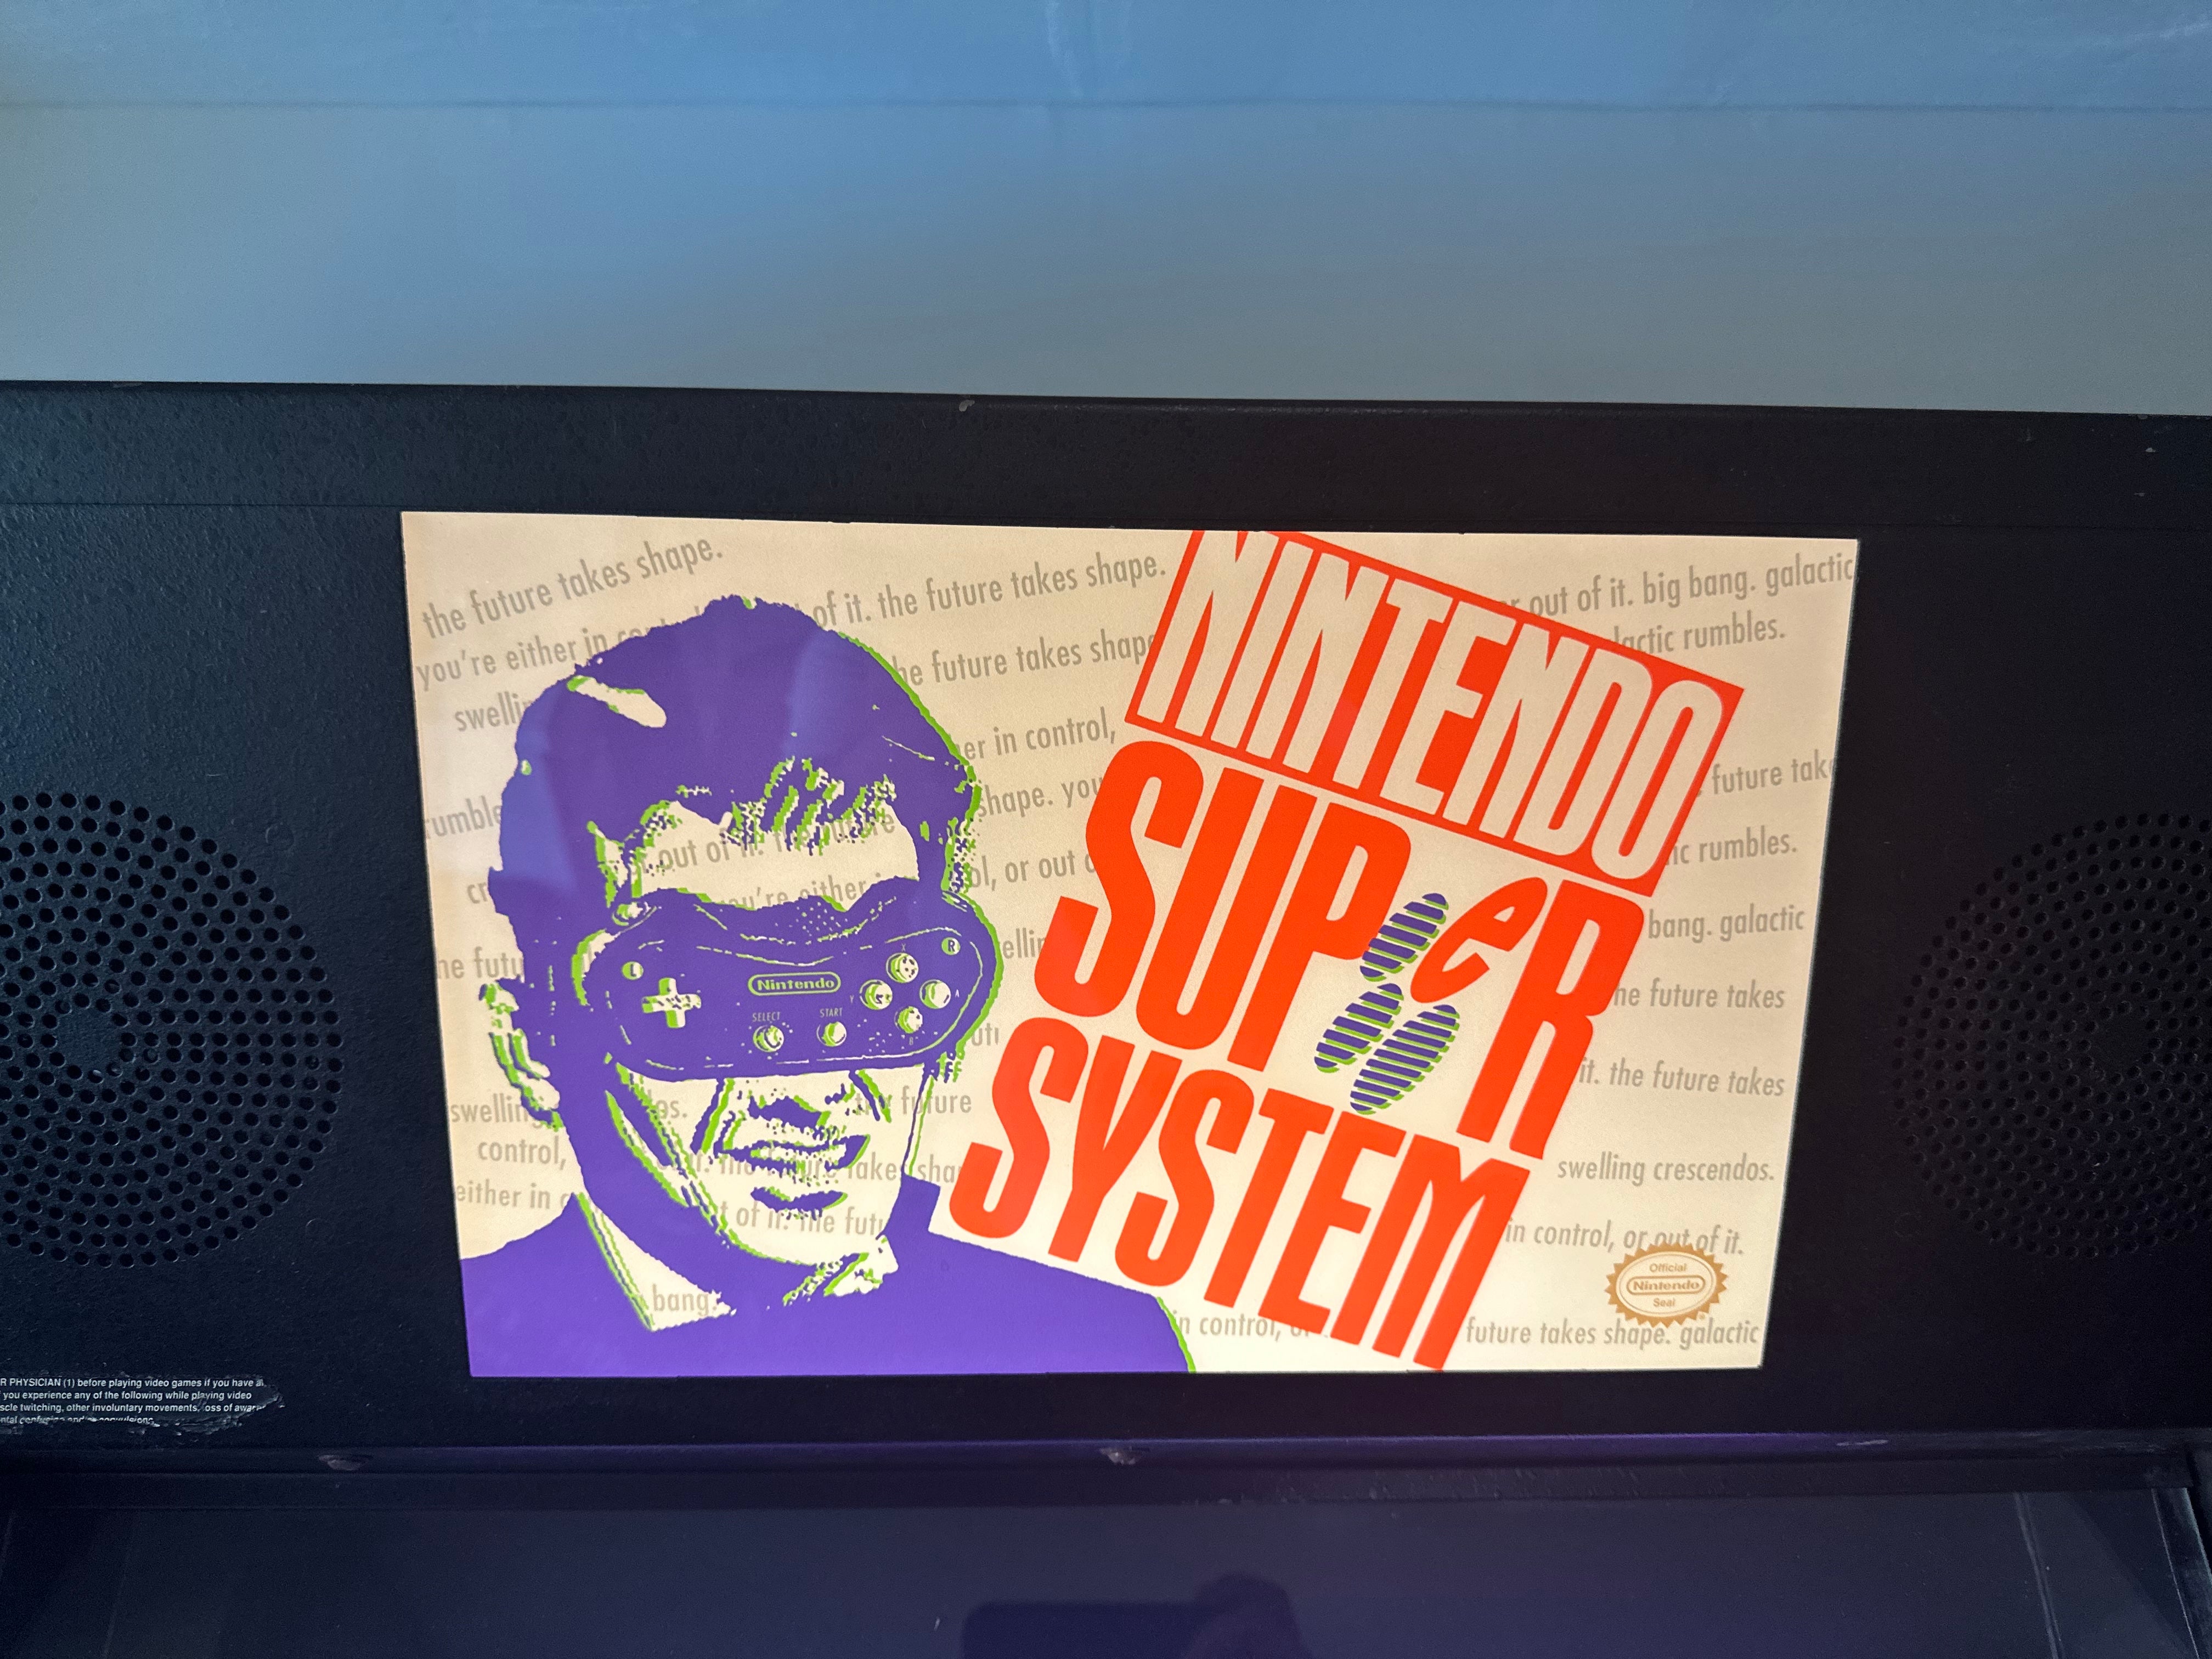 Chapiteau Nintendo Super System